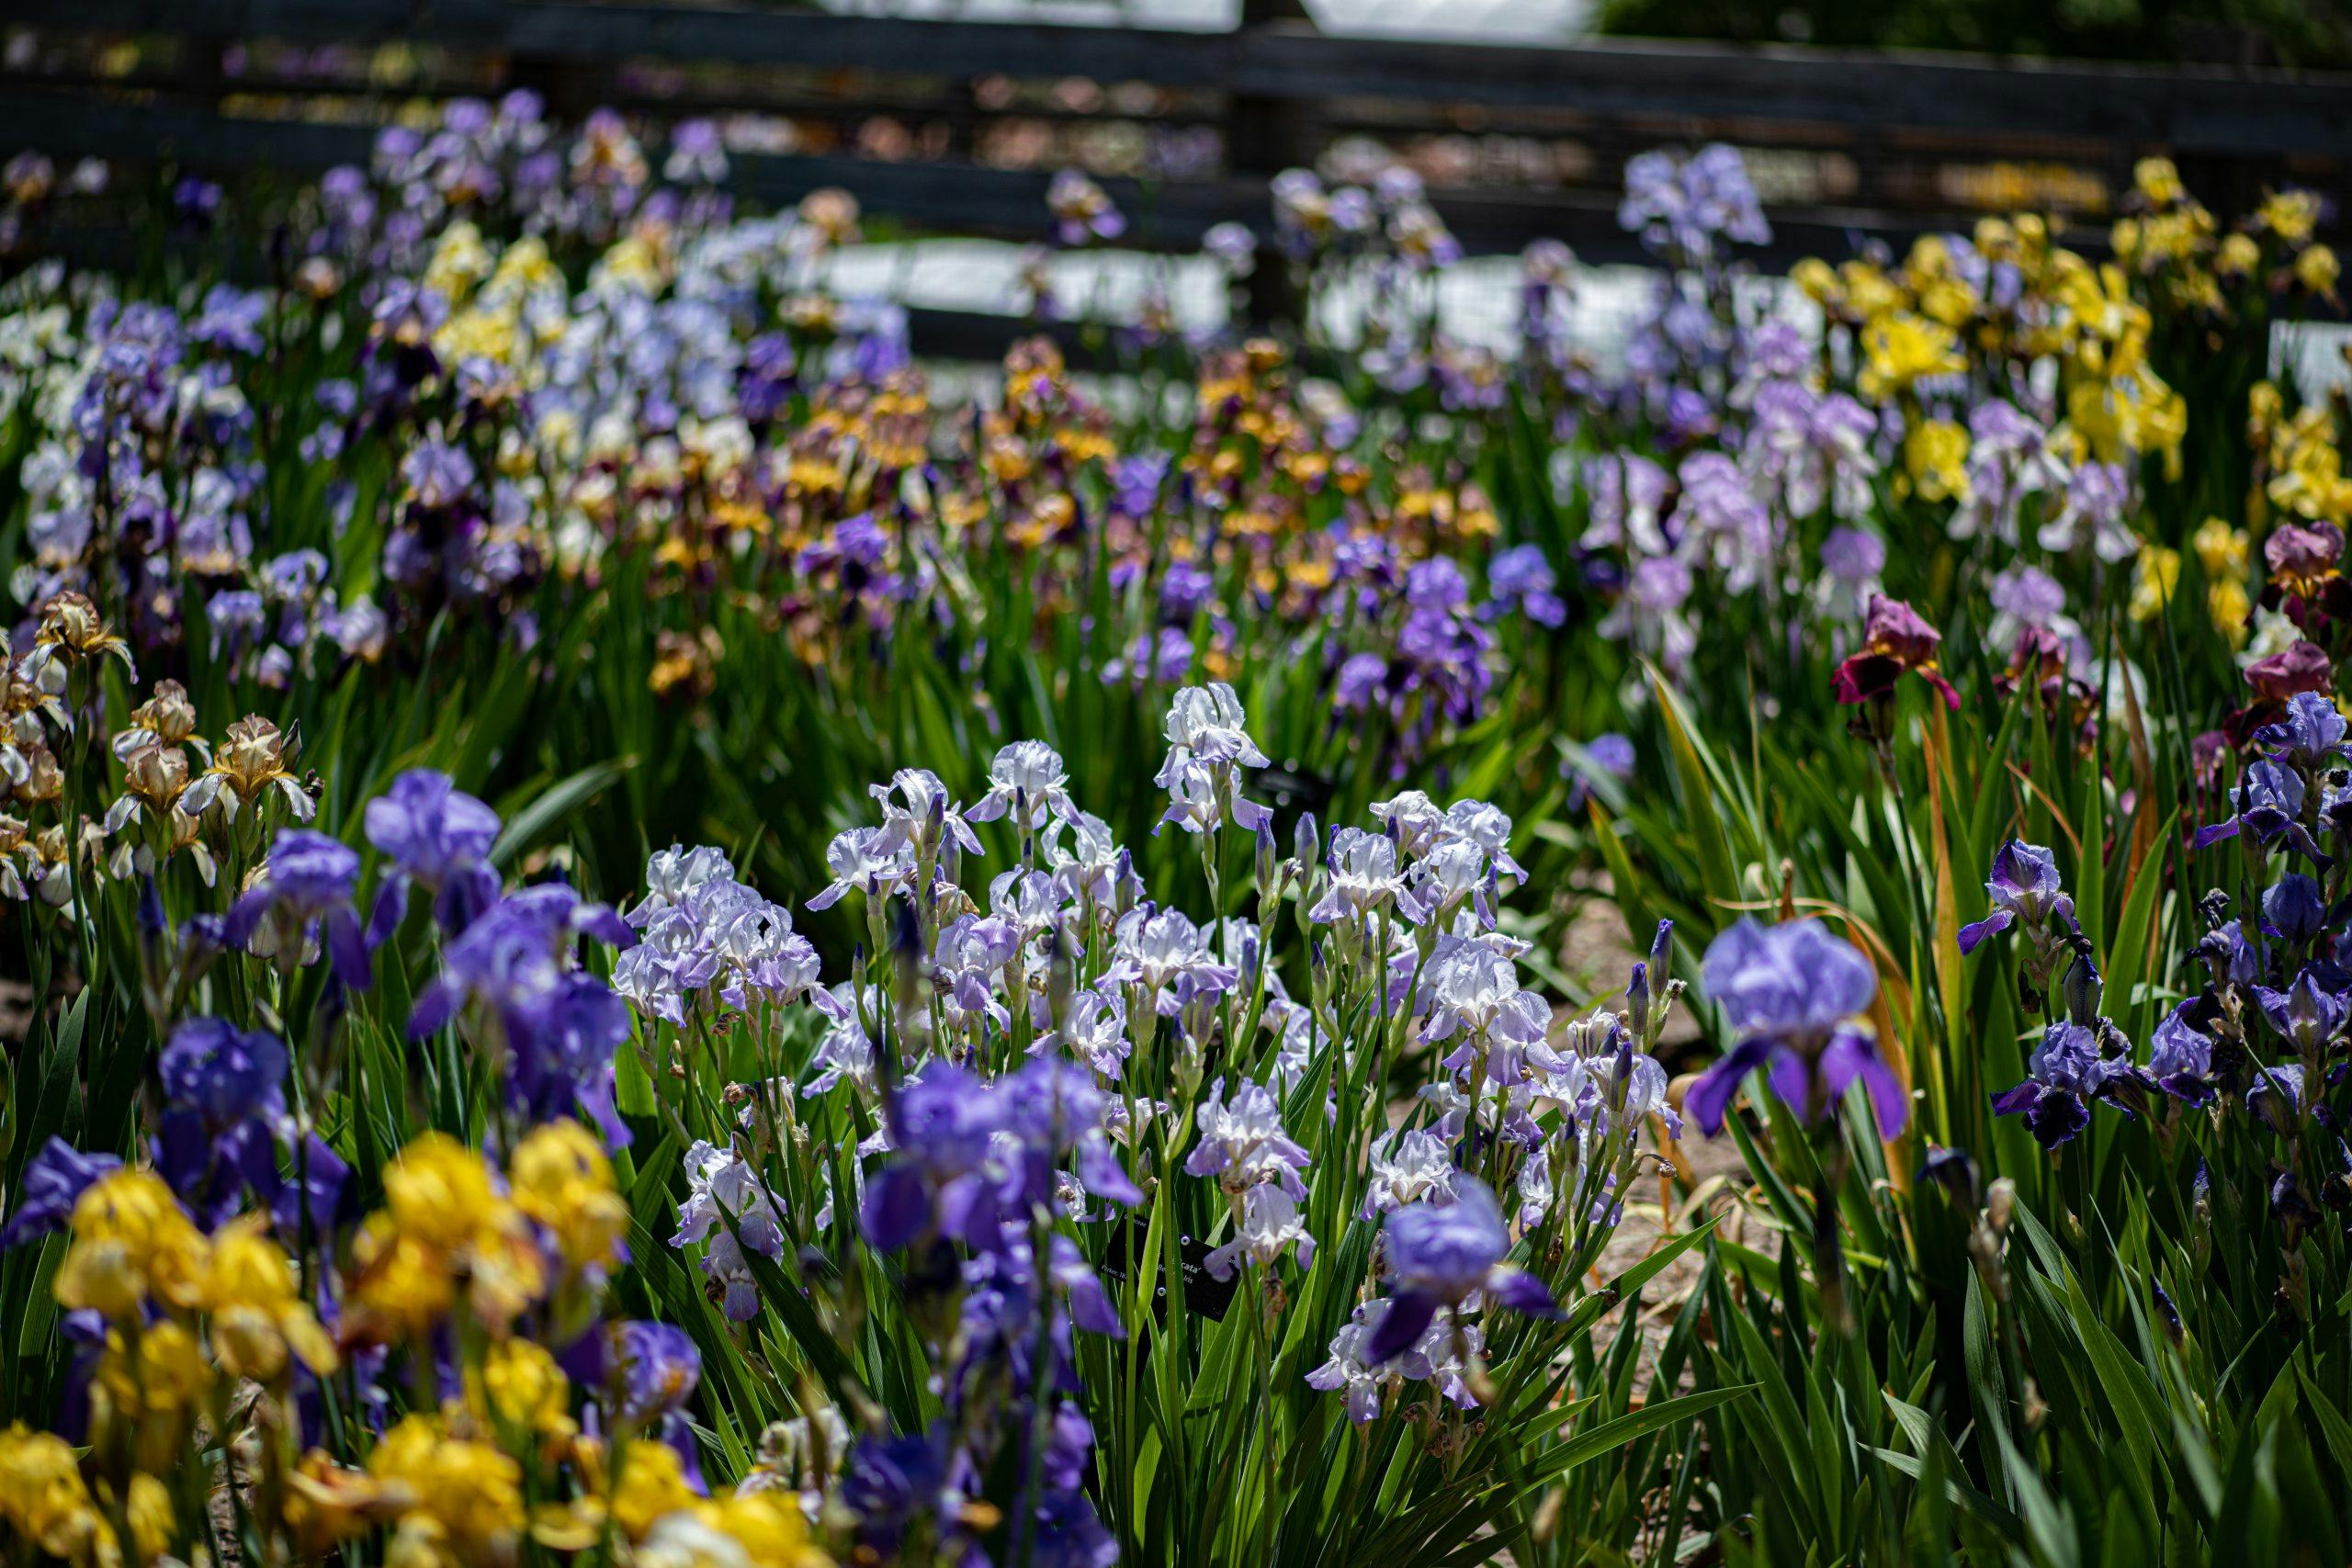 Flowers in a garden, iris